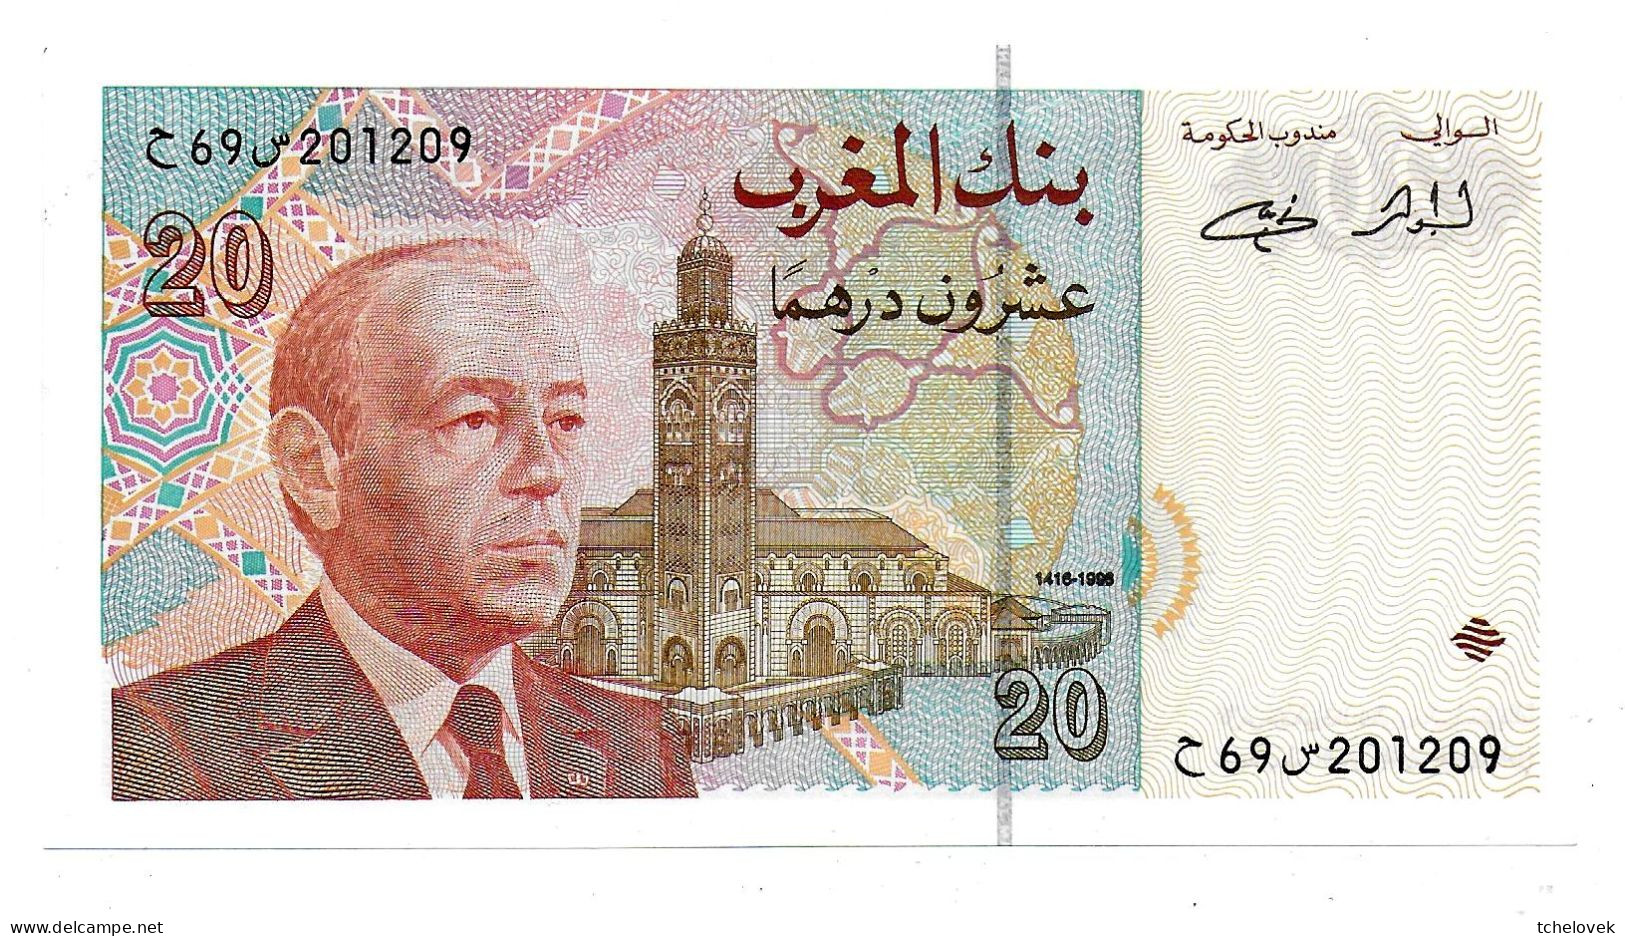 (Billets). Maroc. Morocco. 20 Dirhams 1416 1996 (3). N°69 201209. P 67e. Sign. UNC - Morocco